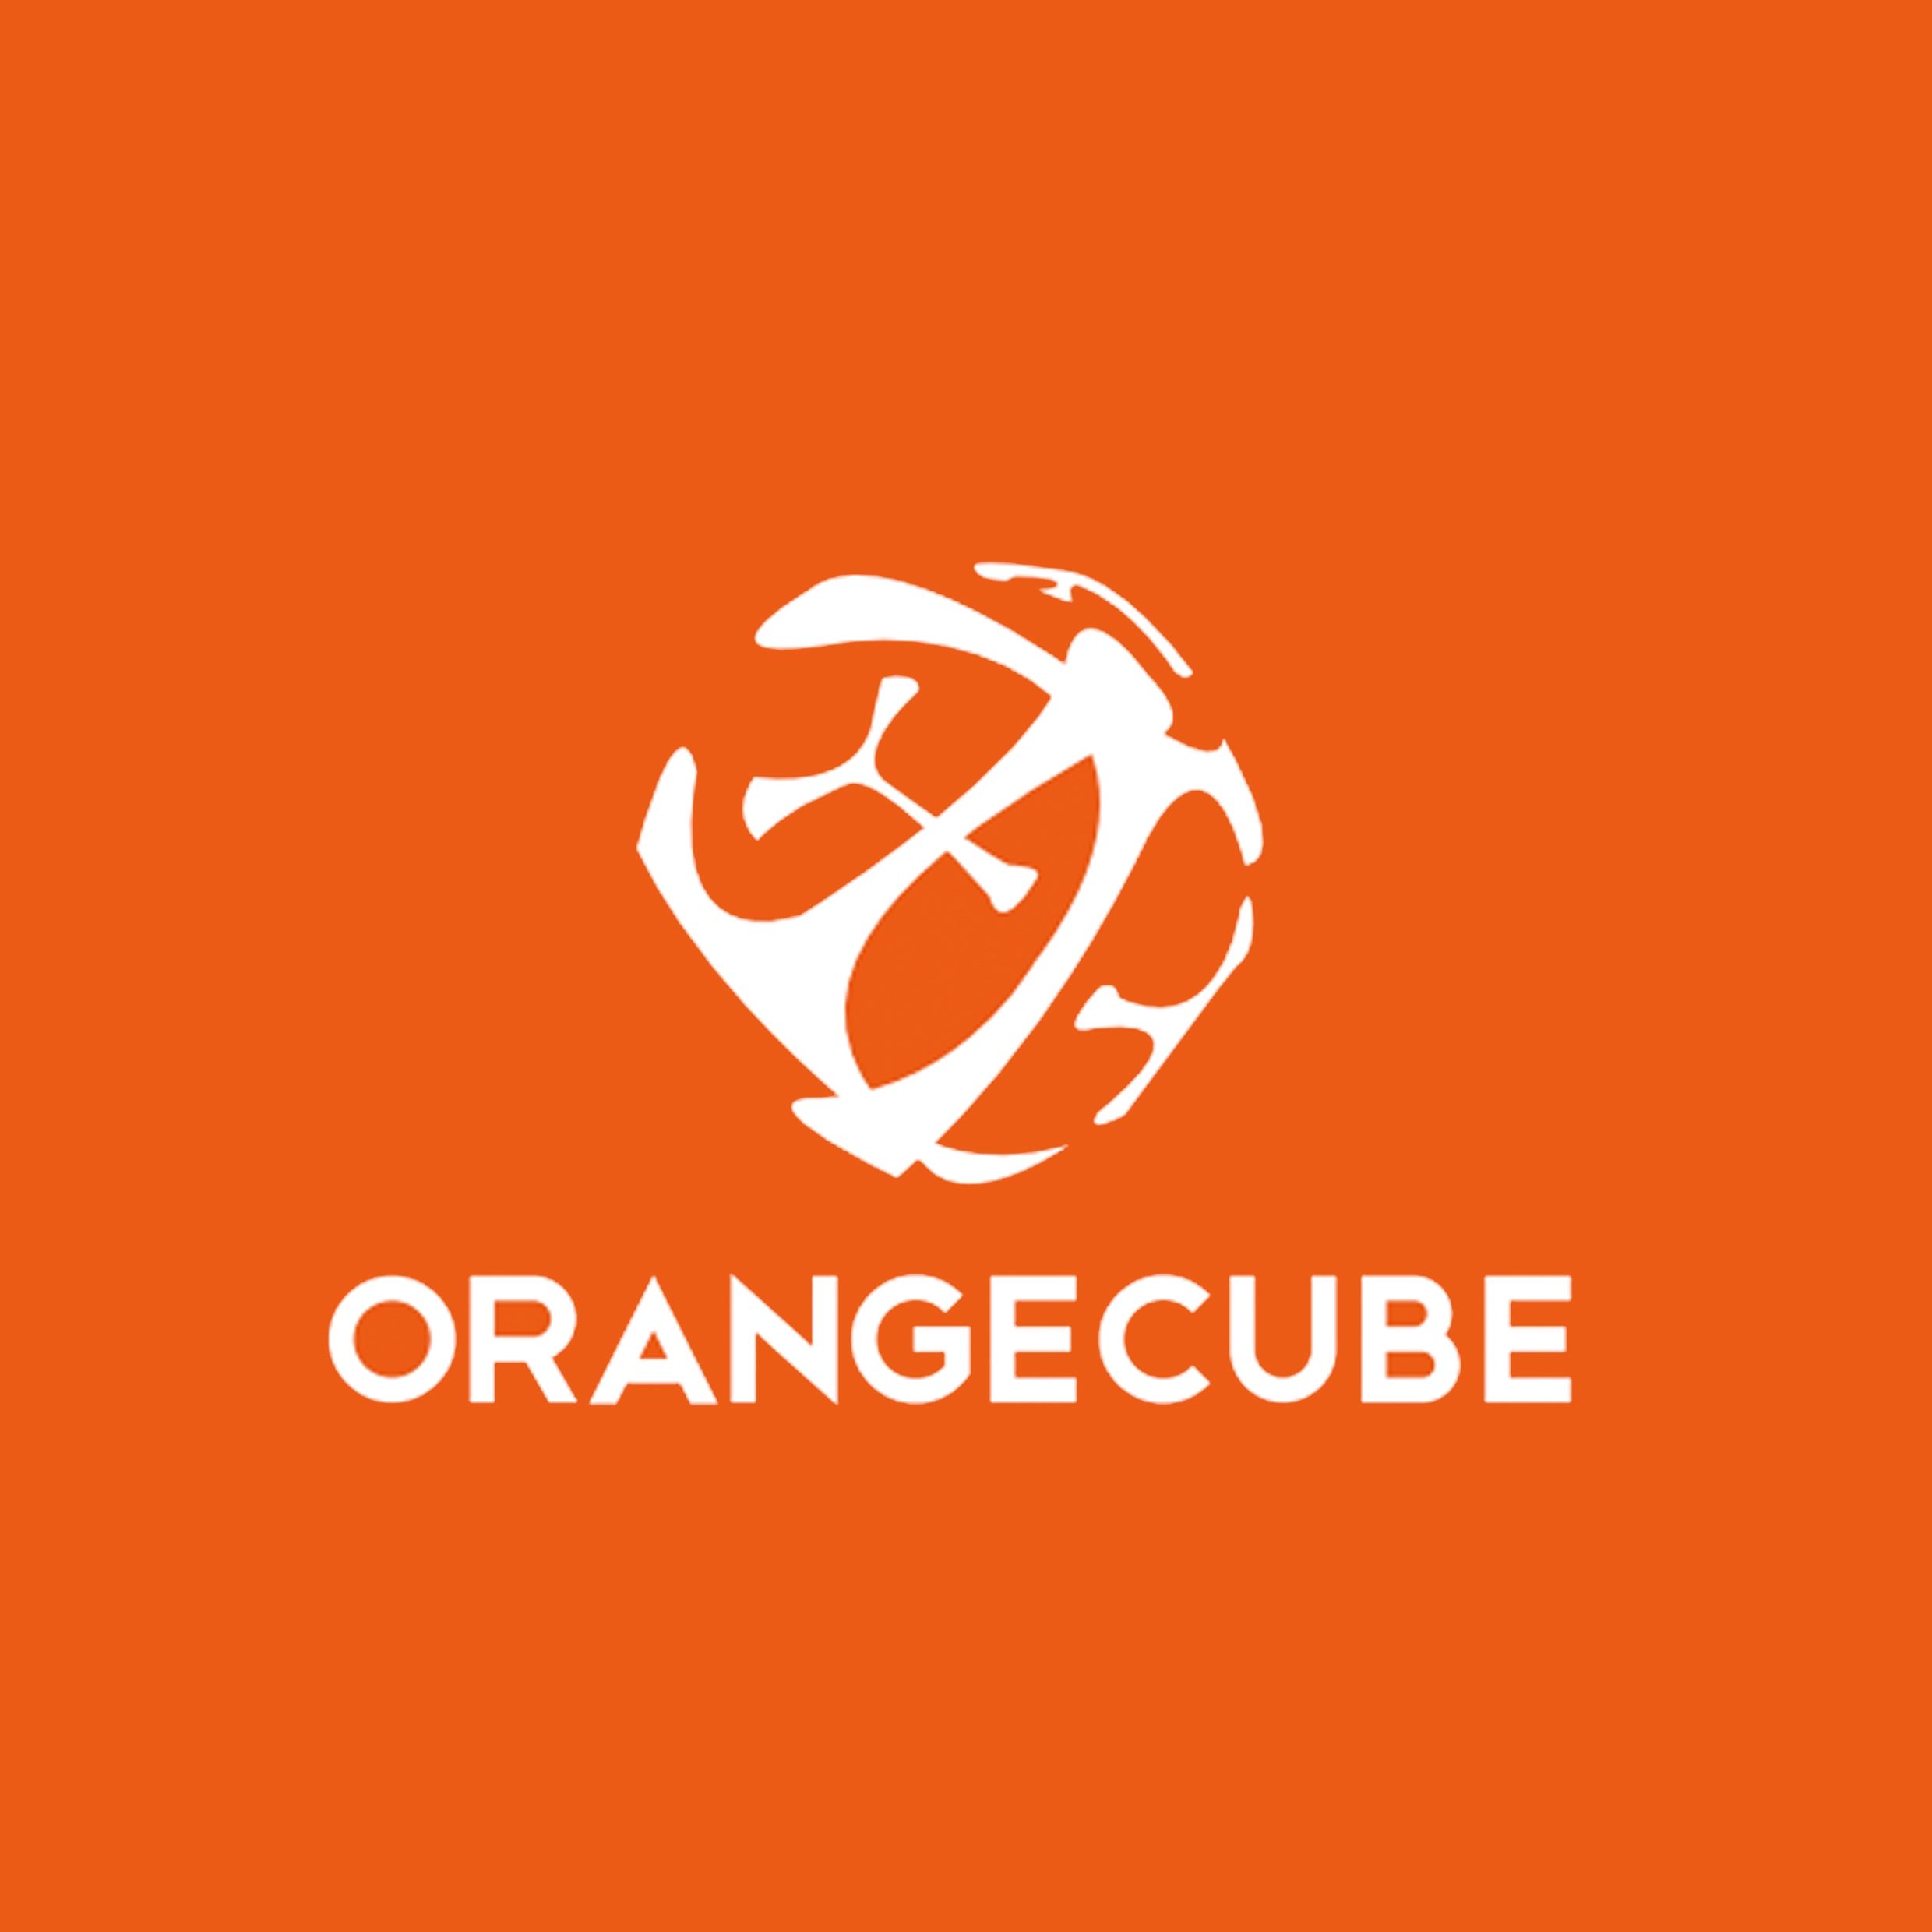 The Orange Cube Pte. Ltd. company logo